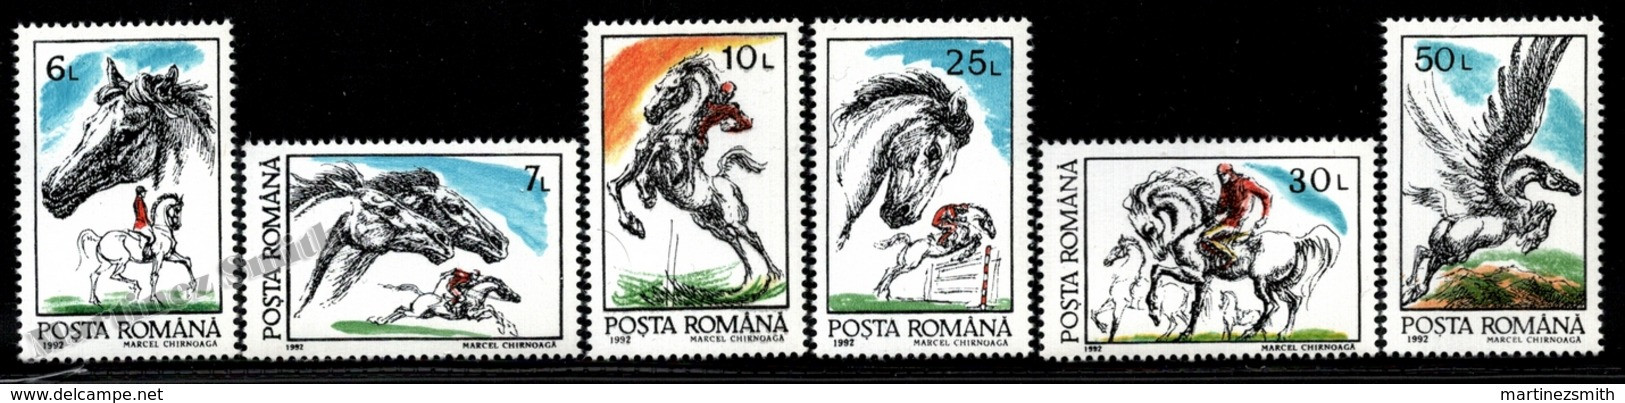 Romania - Roumanie 1992 Yvert 3997-4002, Fauna, Horses - MNH - Nuovi